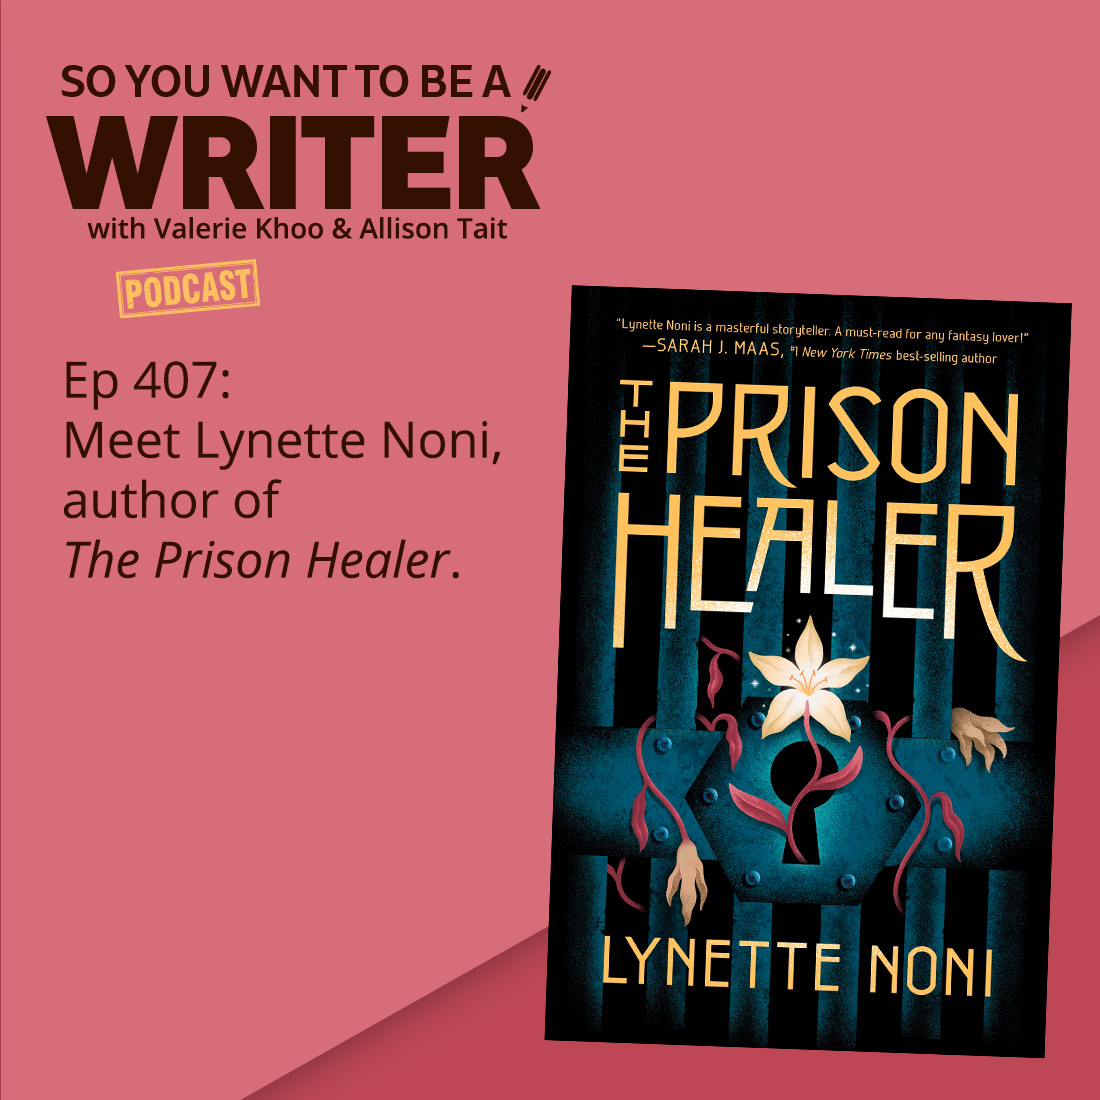 WRITER 407: Meet Lynette Noni, author of 'The Prison Healer'.